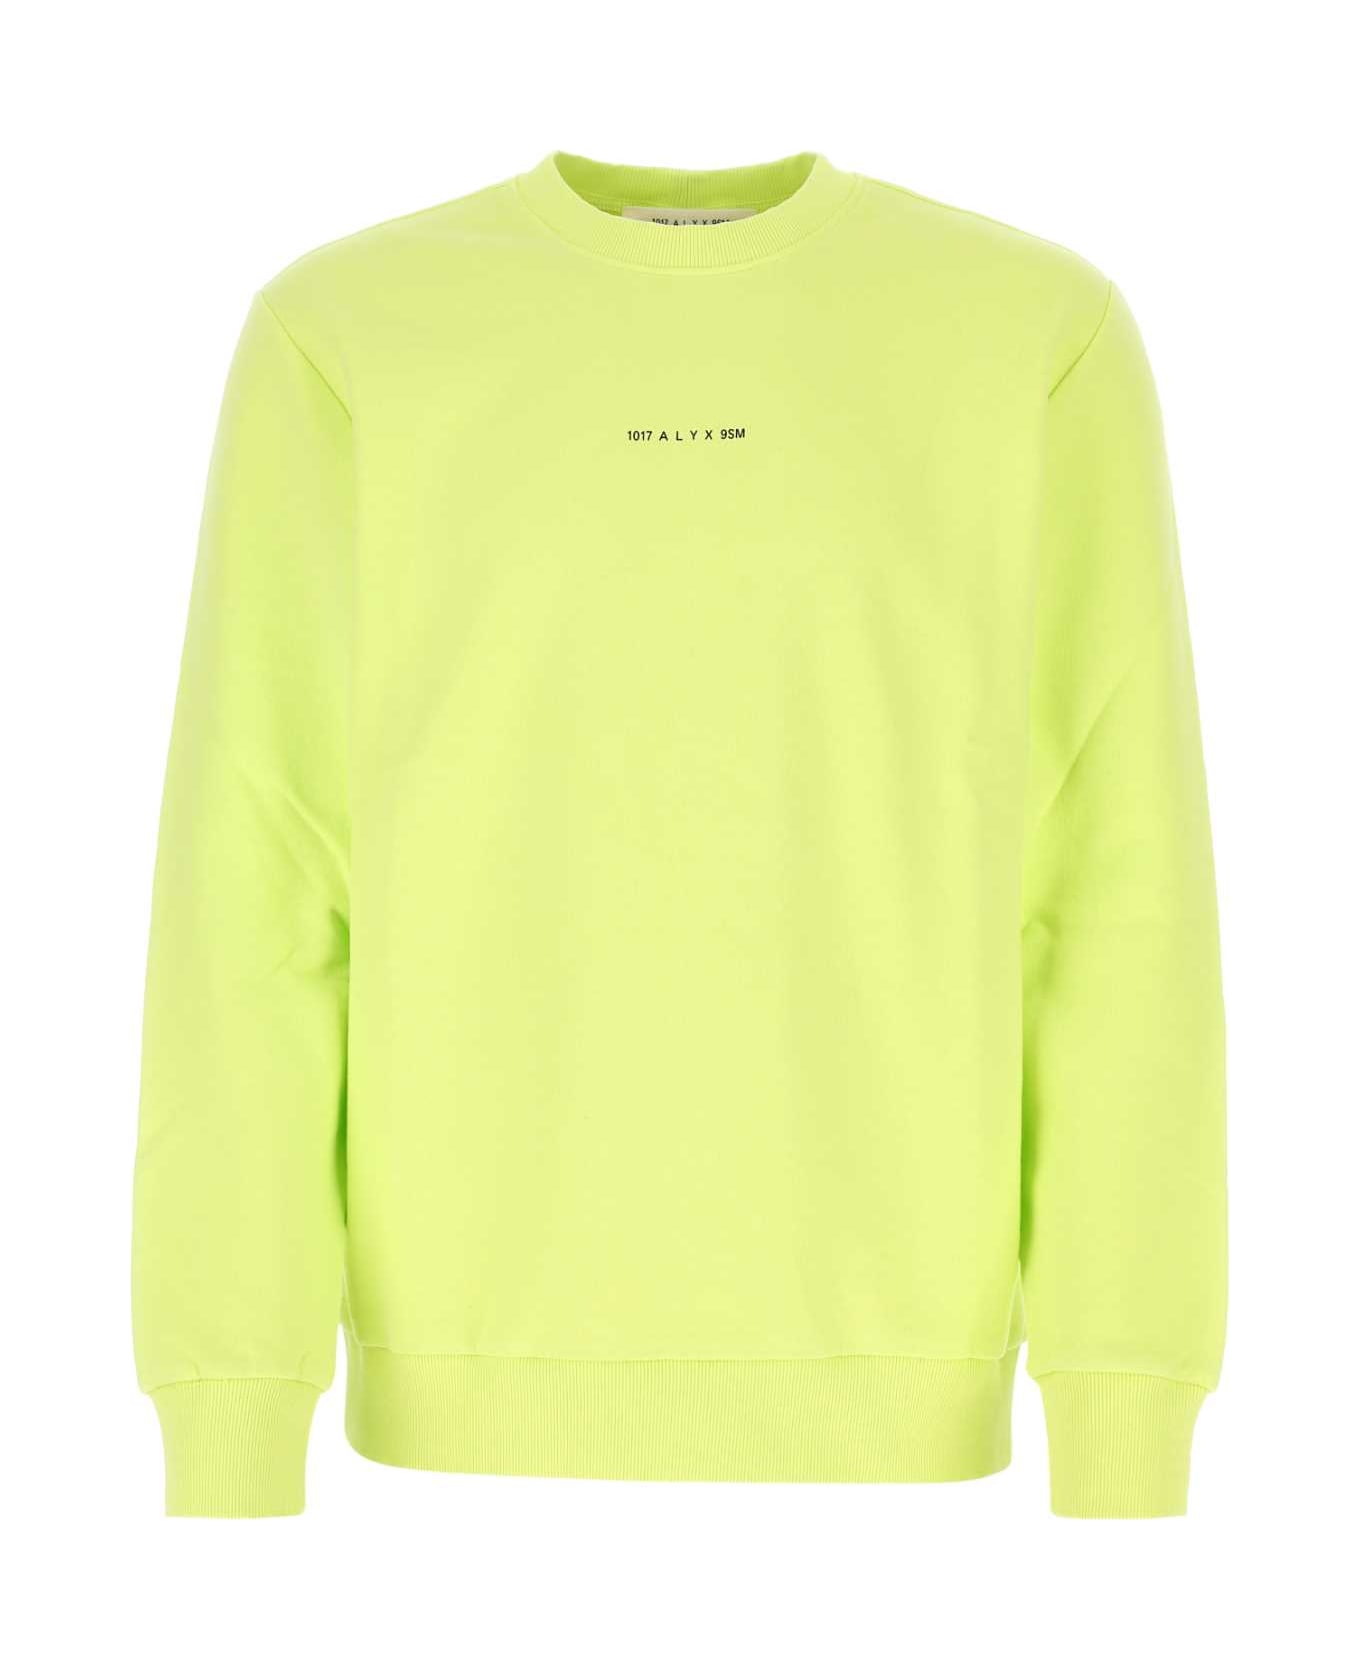 1017 ALYX 9SM Fluo Yellow Cotton Oversize Sweatshirt - YLW0041